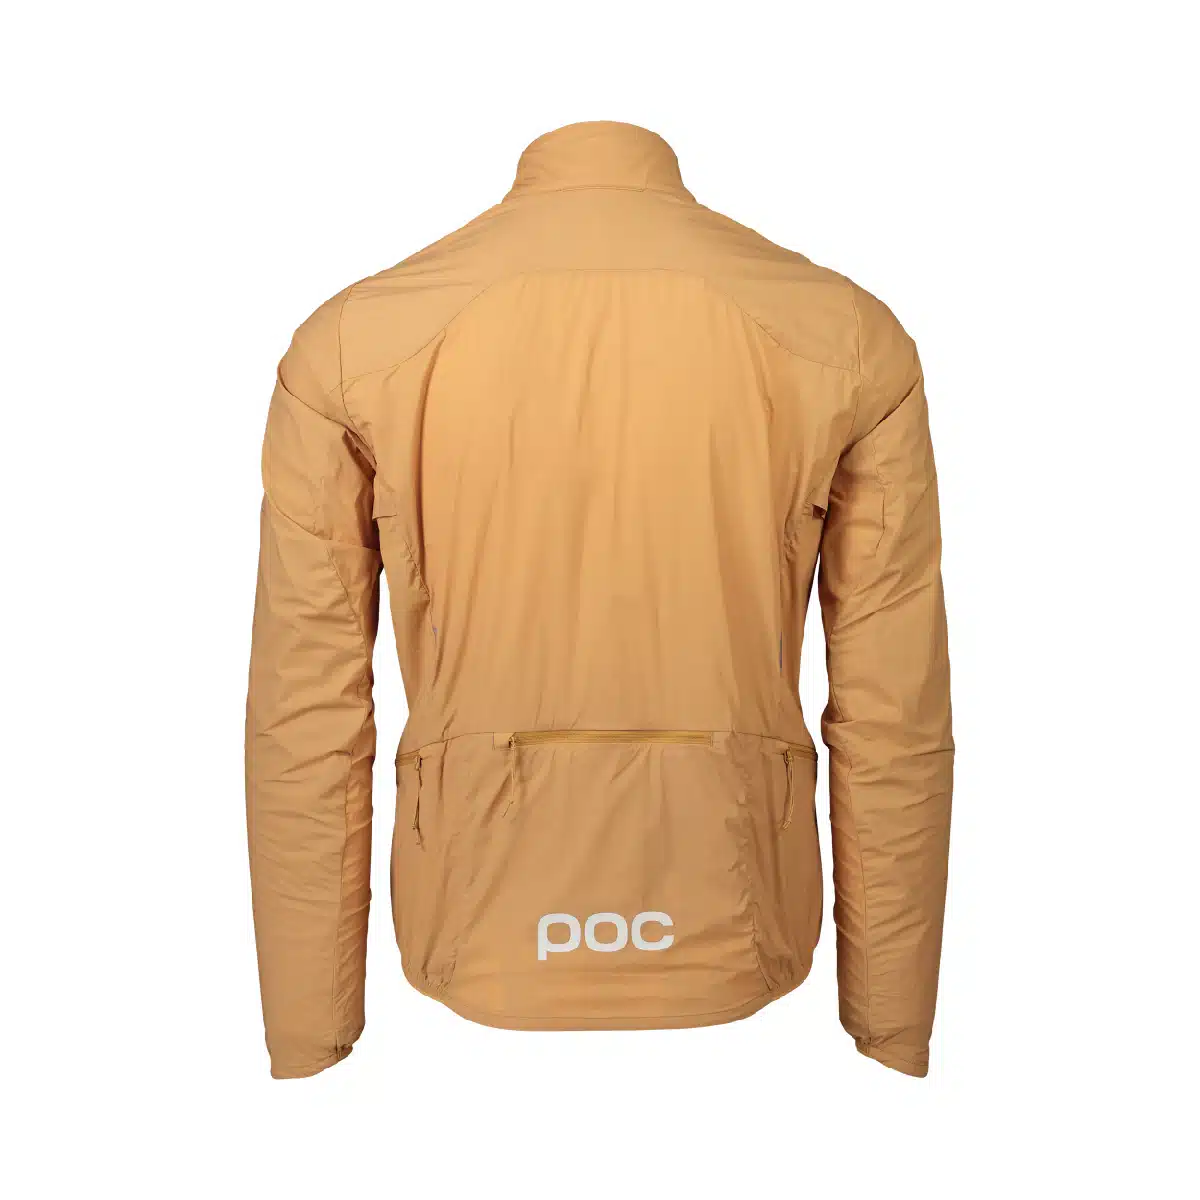 Poc Pro Thermal Jacket Aragonite Brown rear